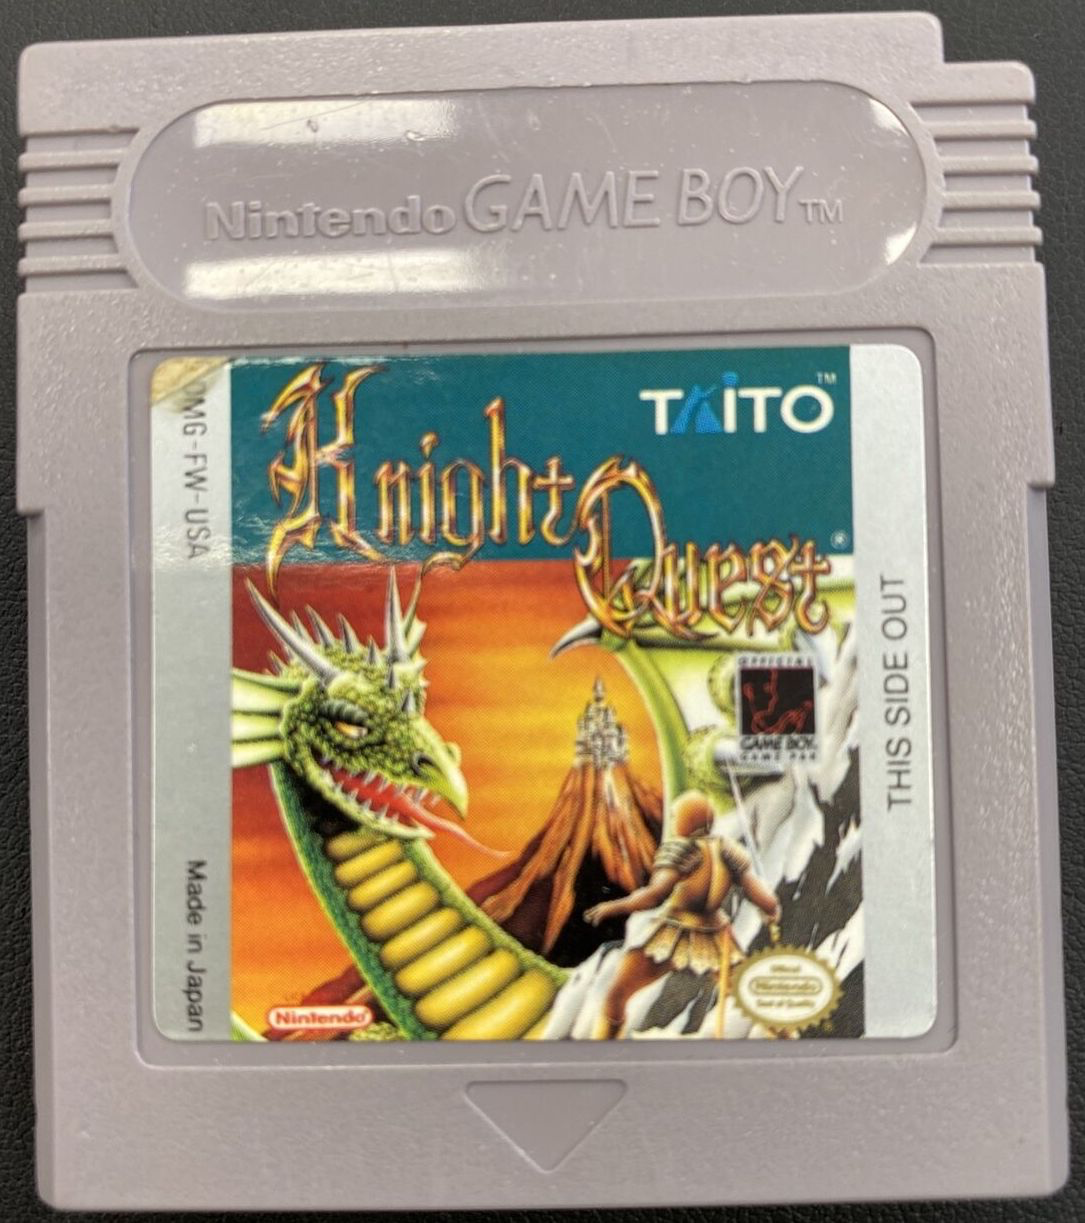 Knight Quest - Game Boy